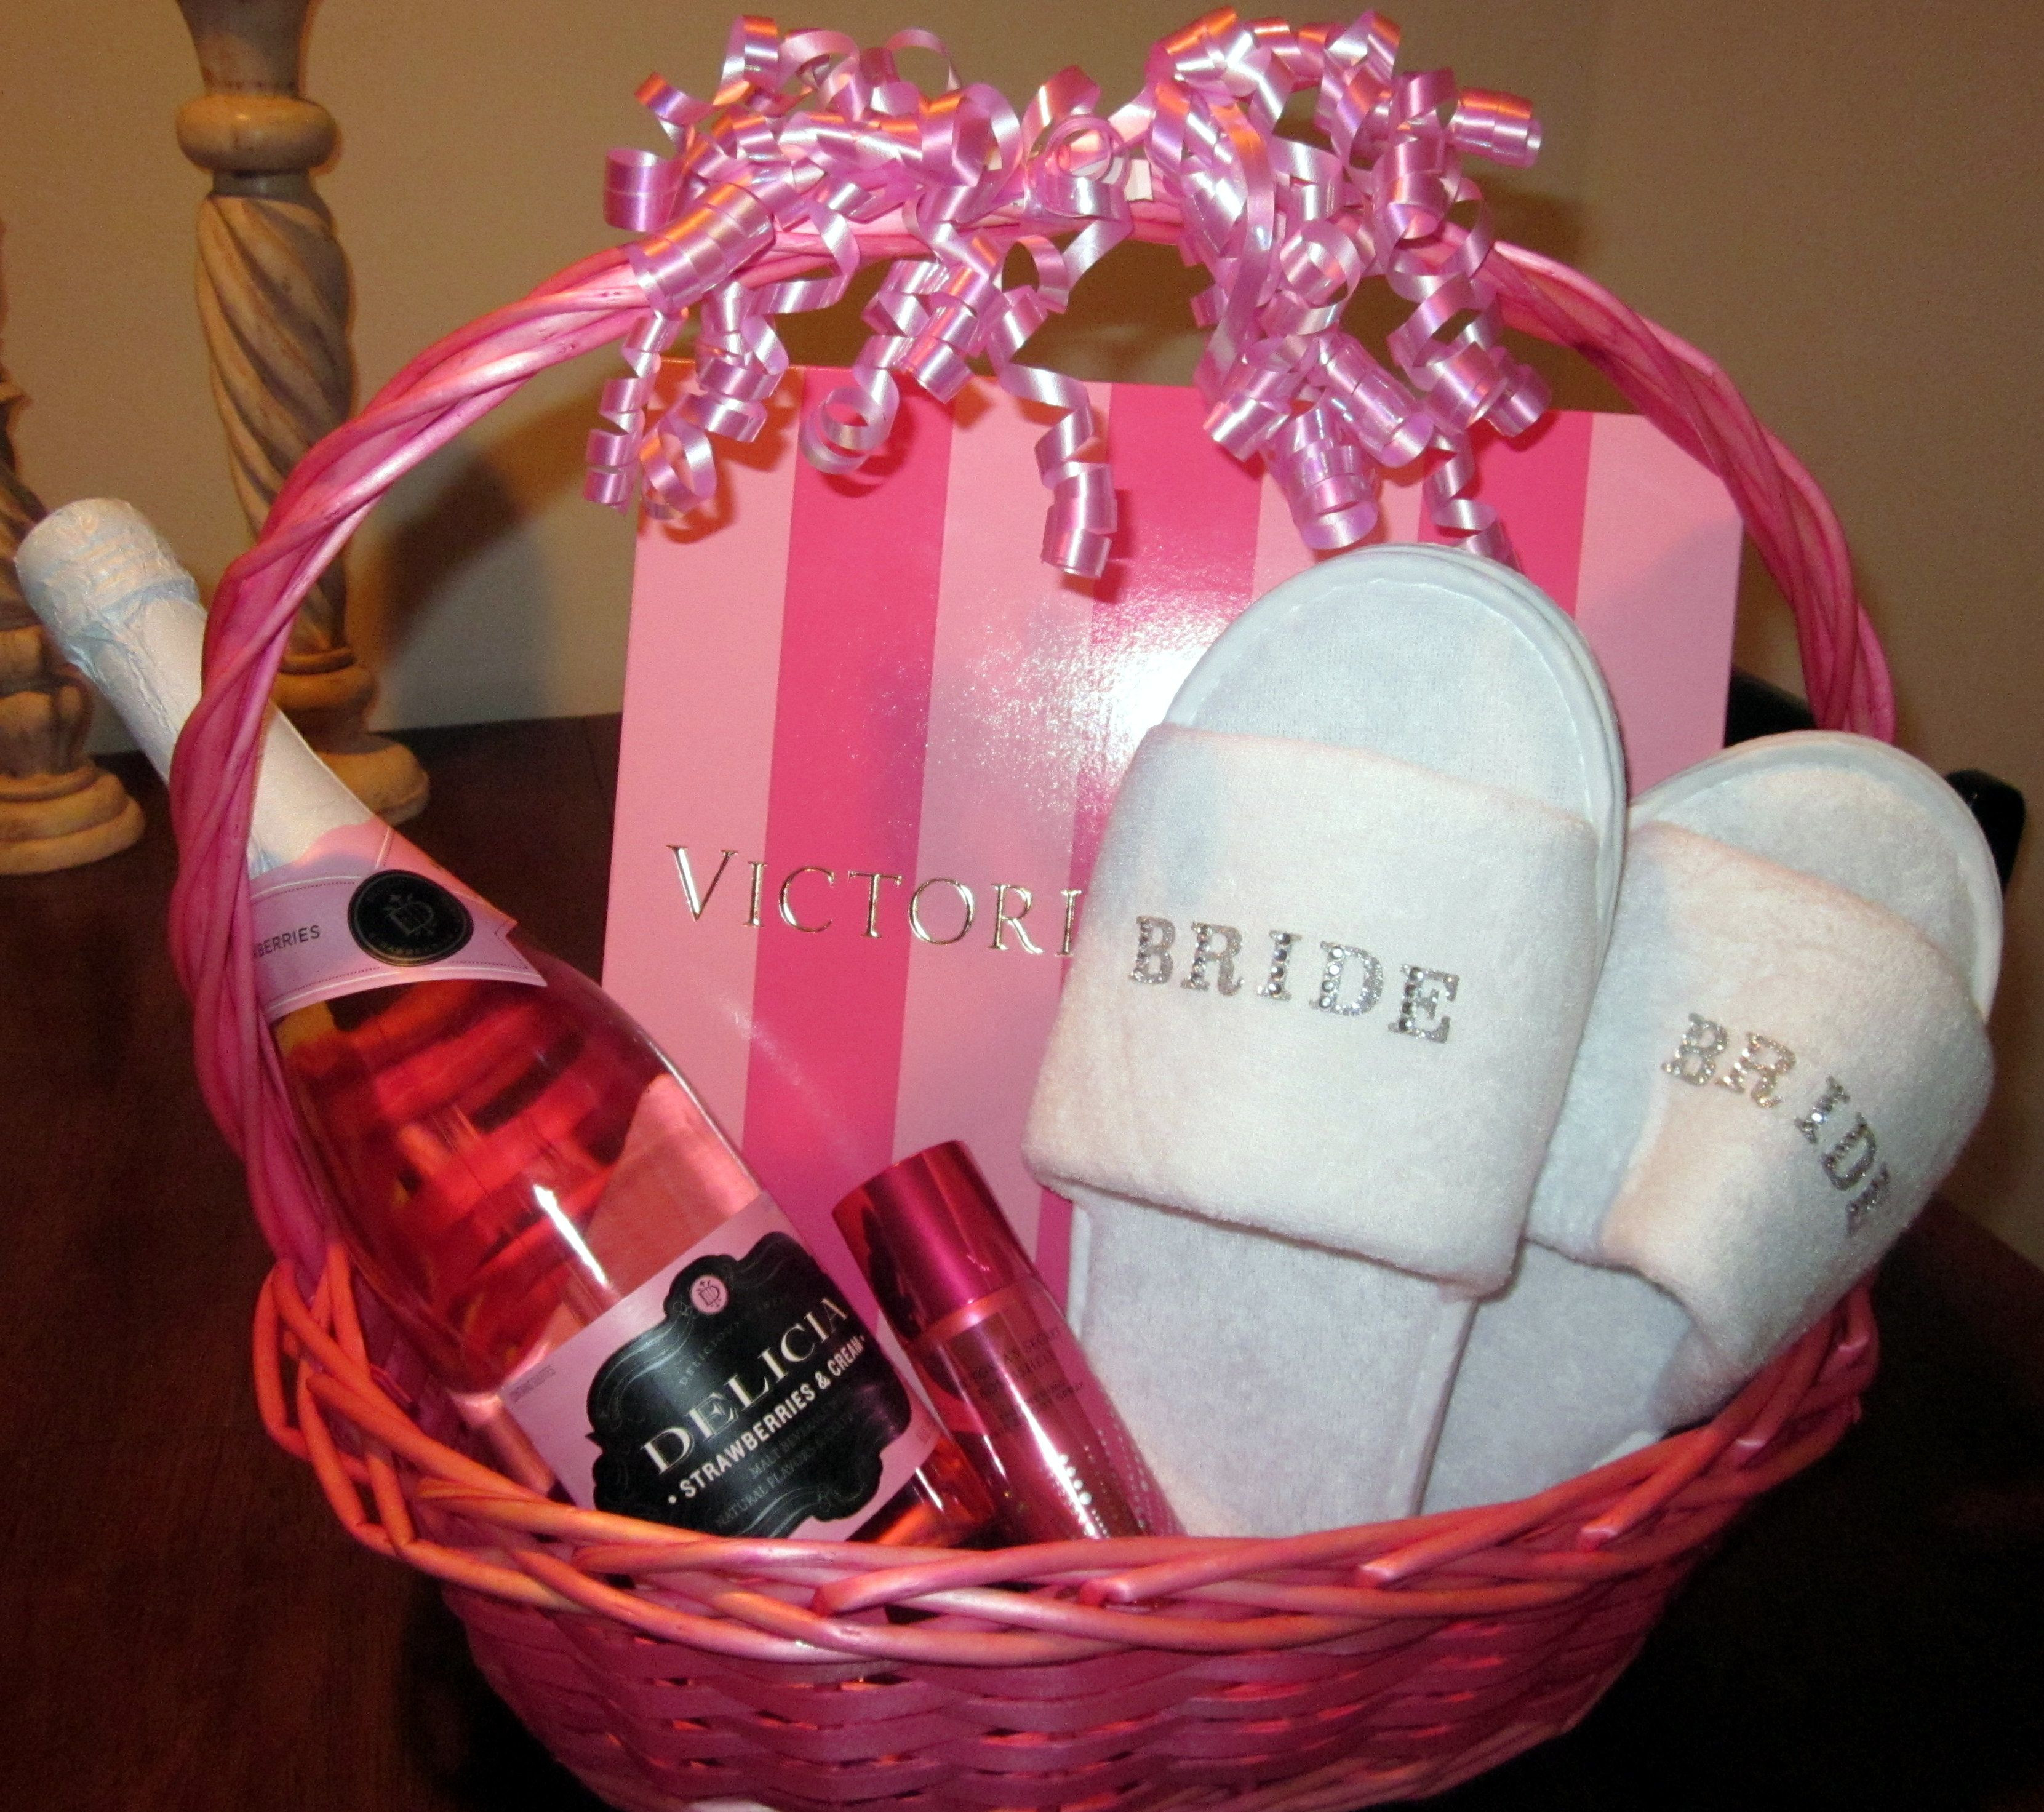 Best ideas about Bridal Shower Gift Ideas Pinterest
. Save or Pin Bridal Shower Gift Ideas For The Bride Now.